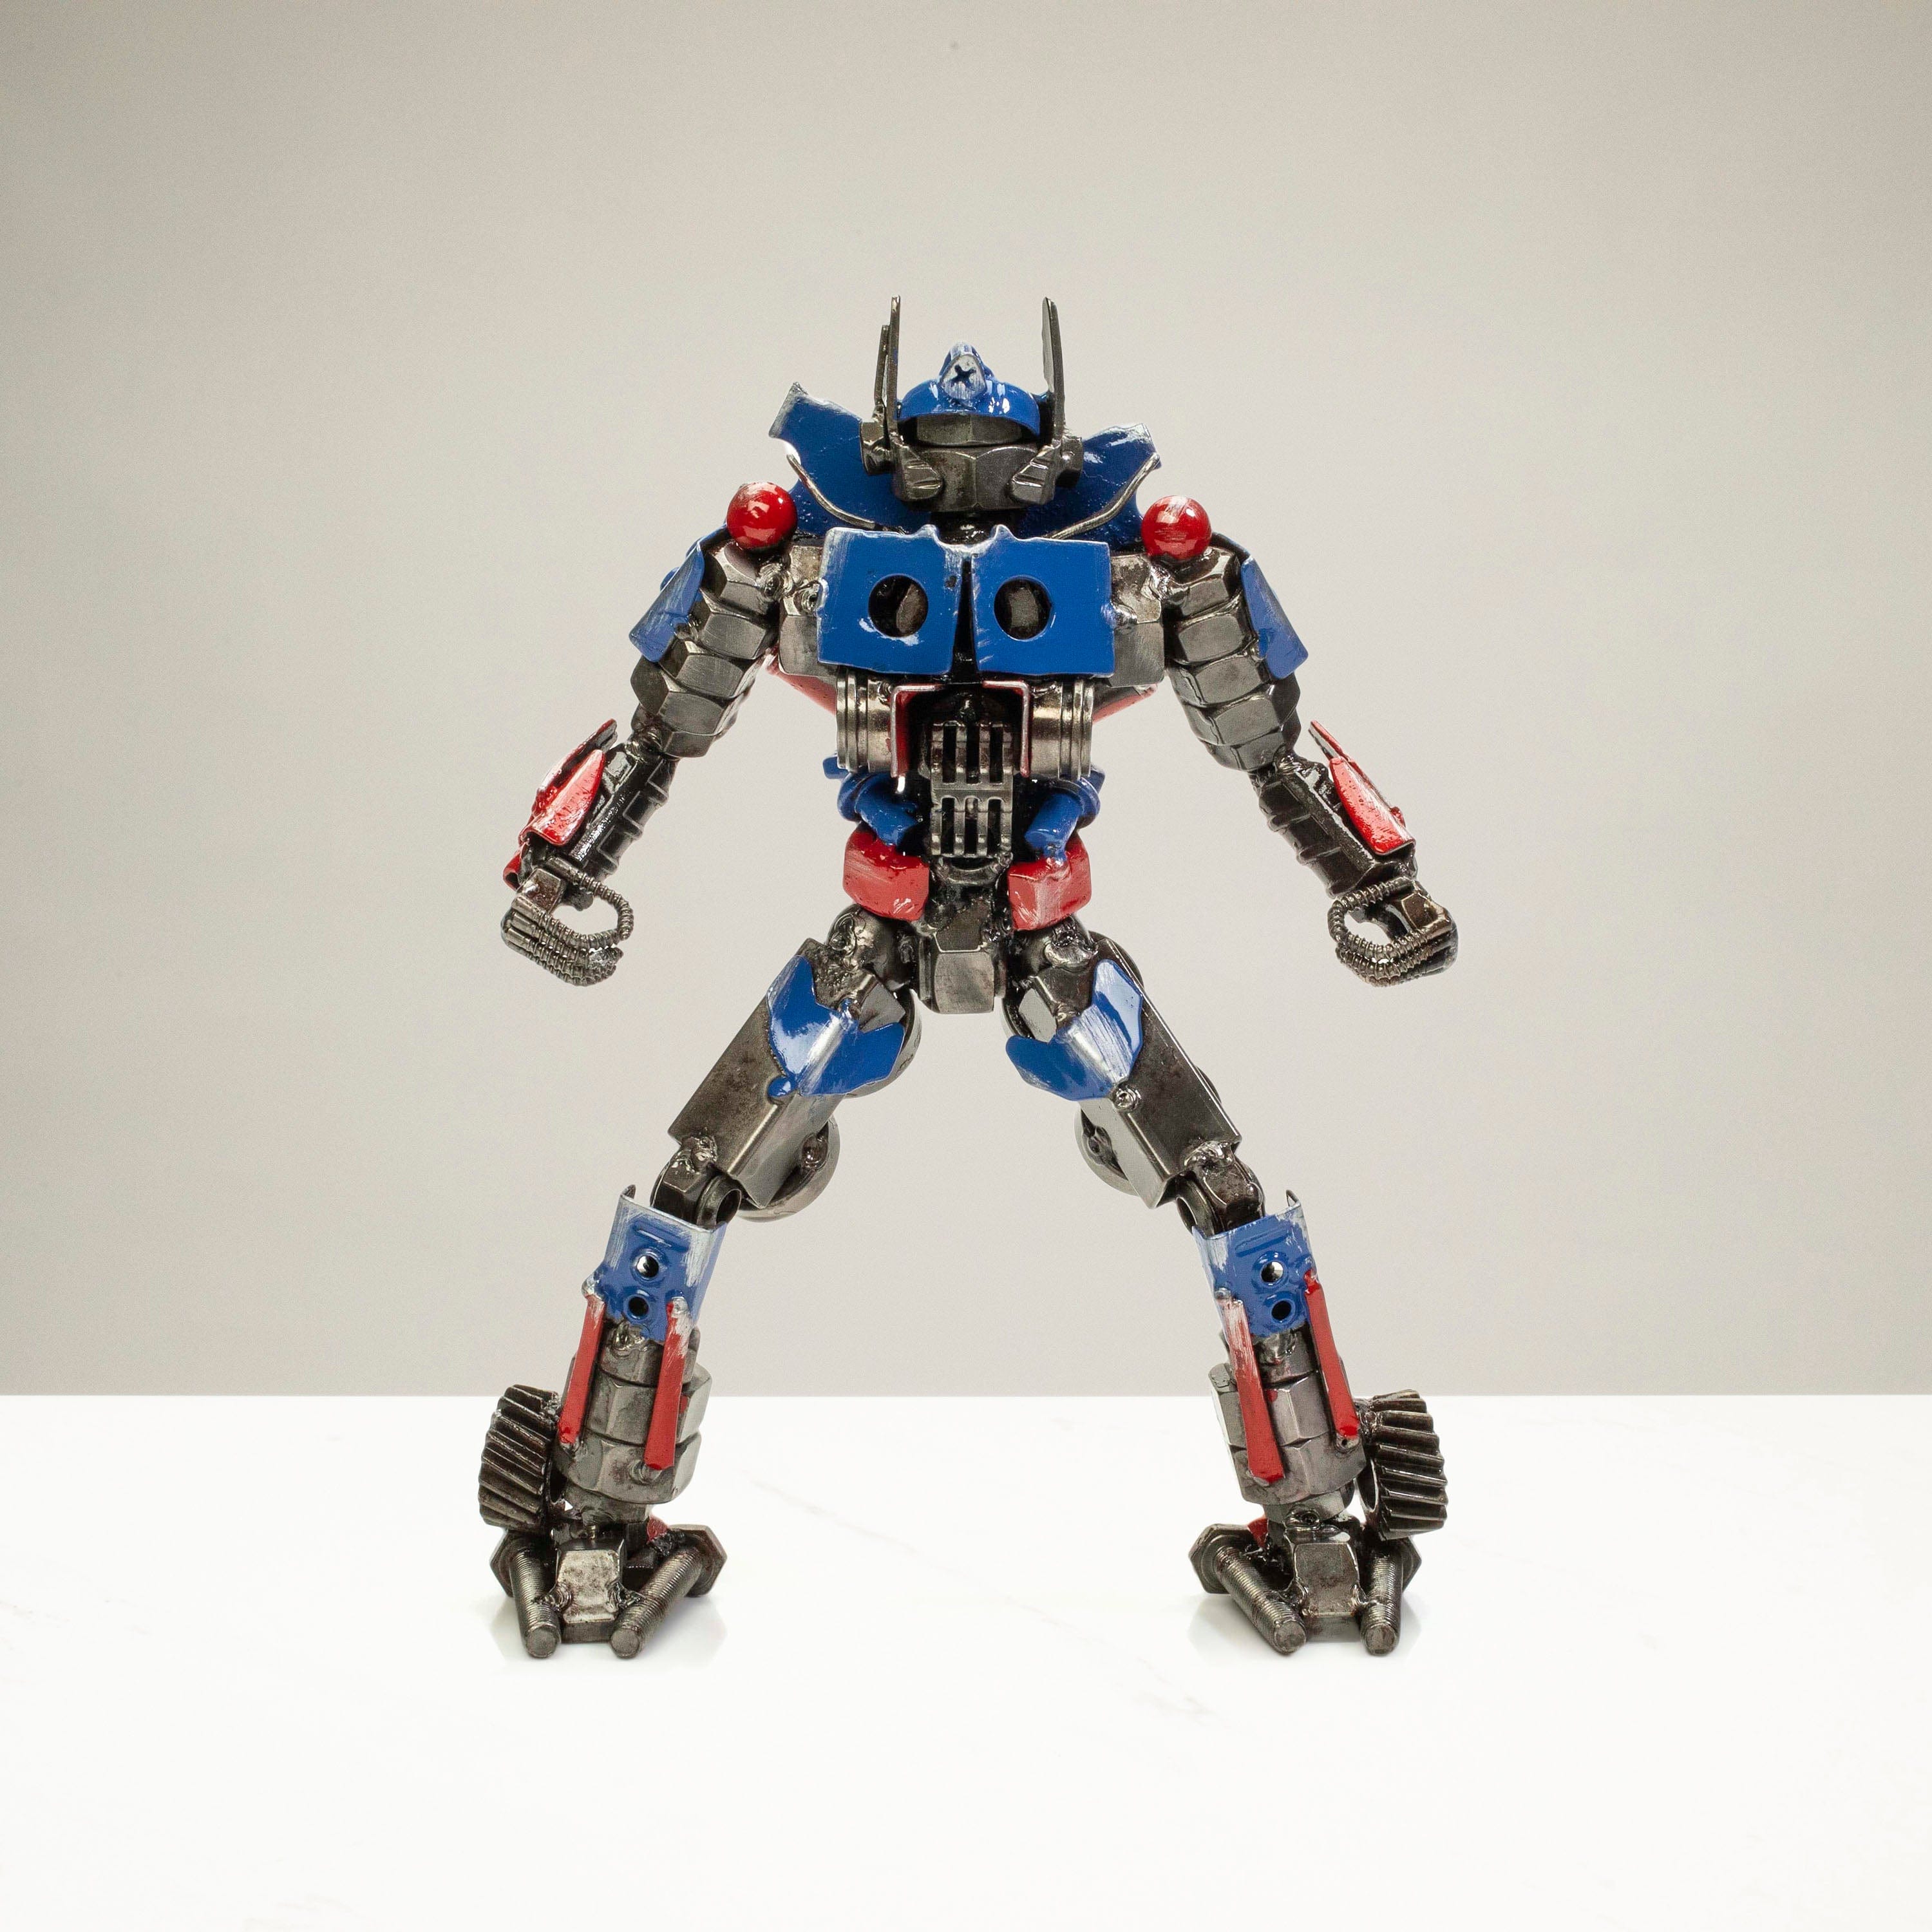 KALIFANO Recycled Metal Art Optimus Prime Inspired Recycled Metal Sculpture Original RMS-700OPA-N